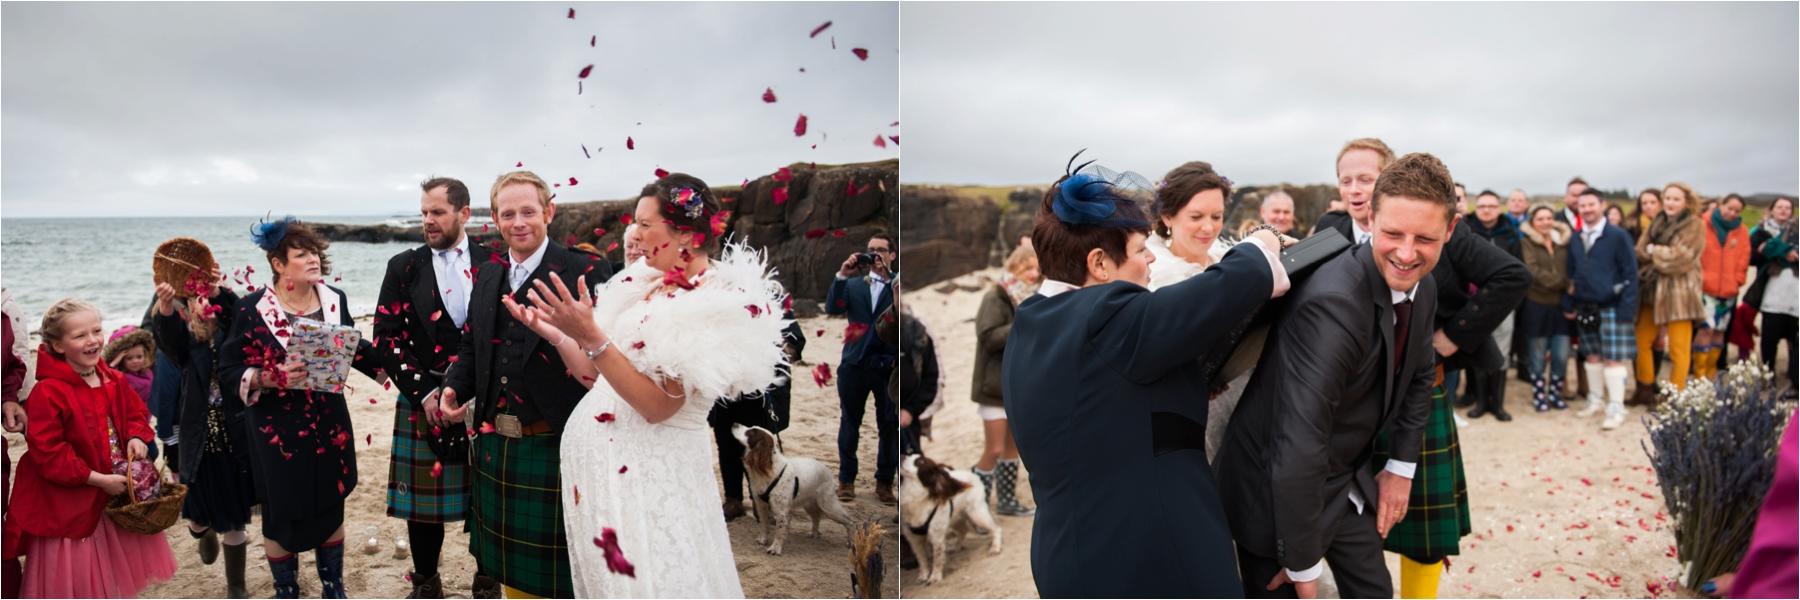 beach wedding celebrations Scottish island photography